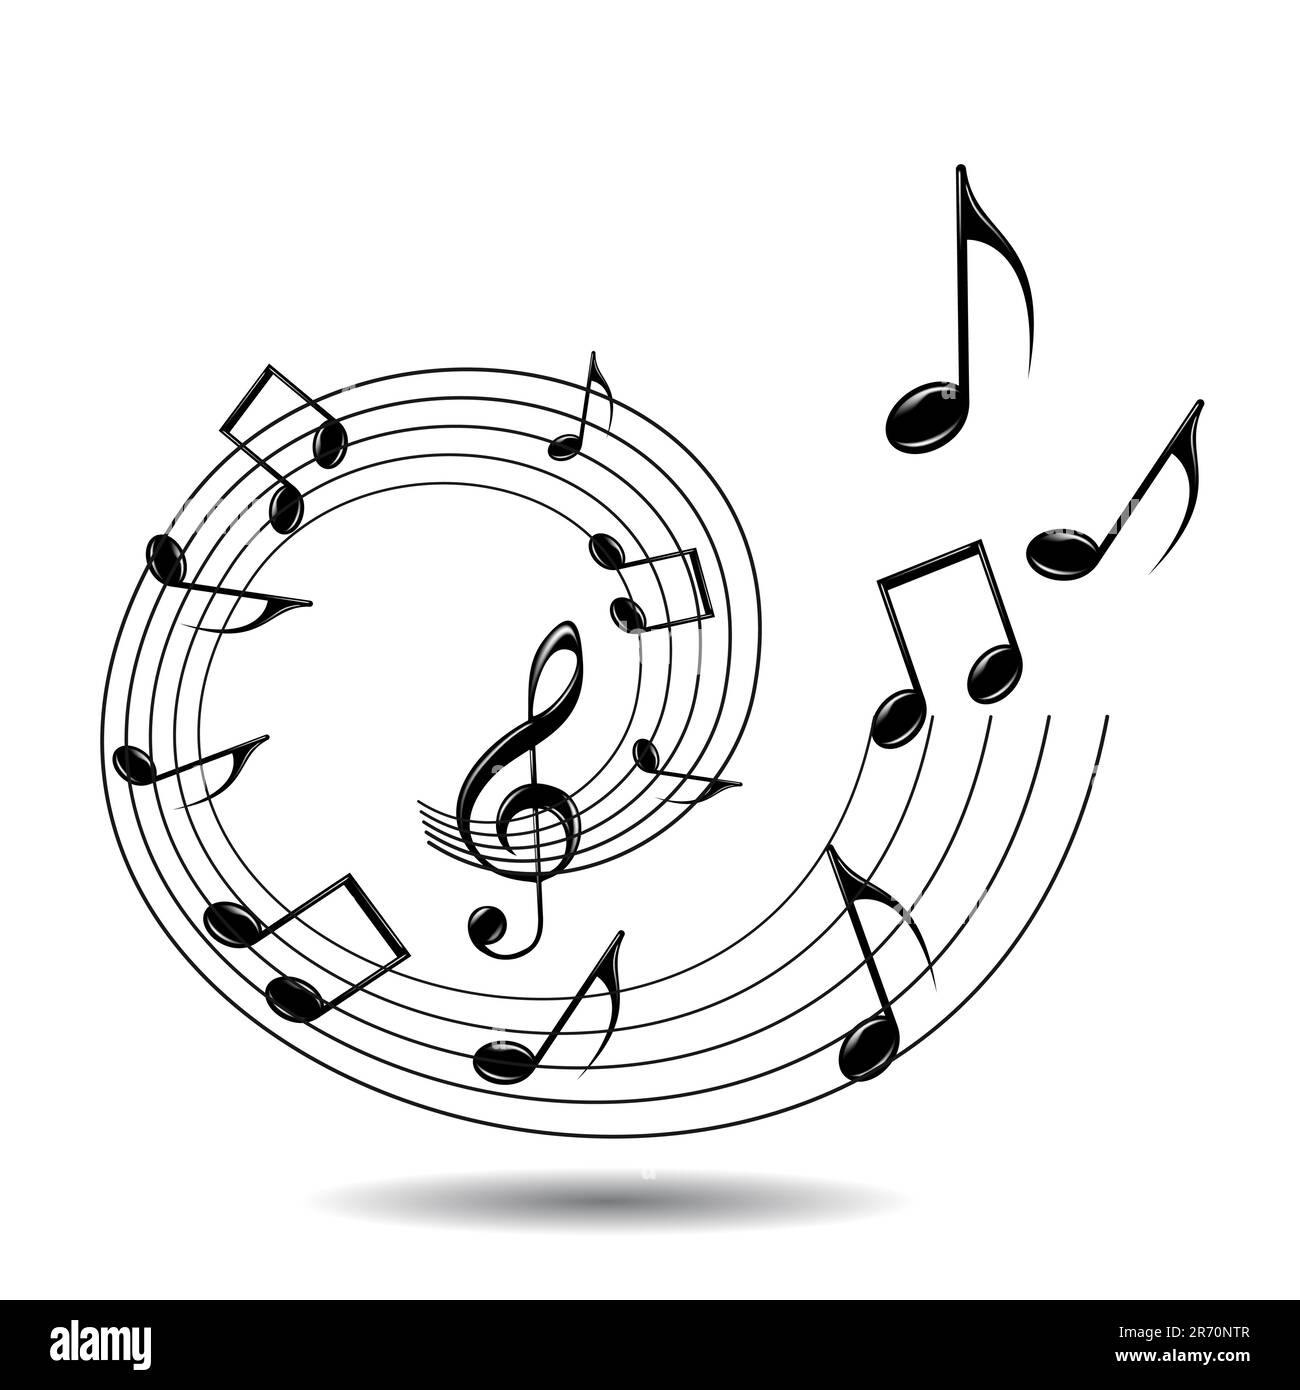 Eps musical theme Illustration for your design. Stock Vector